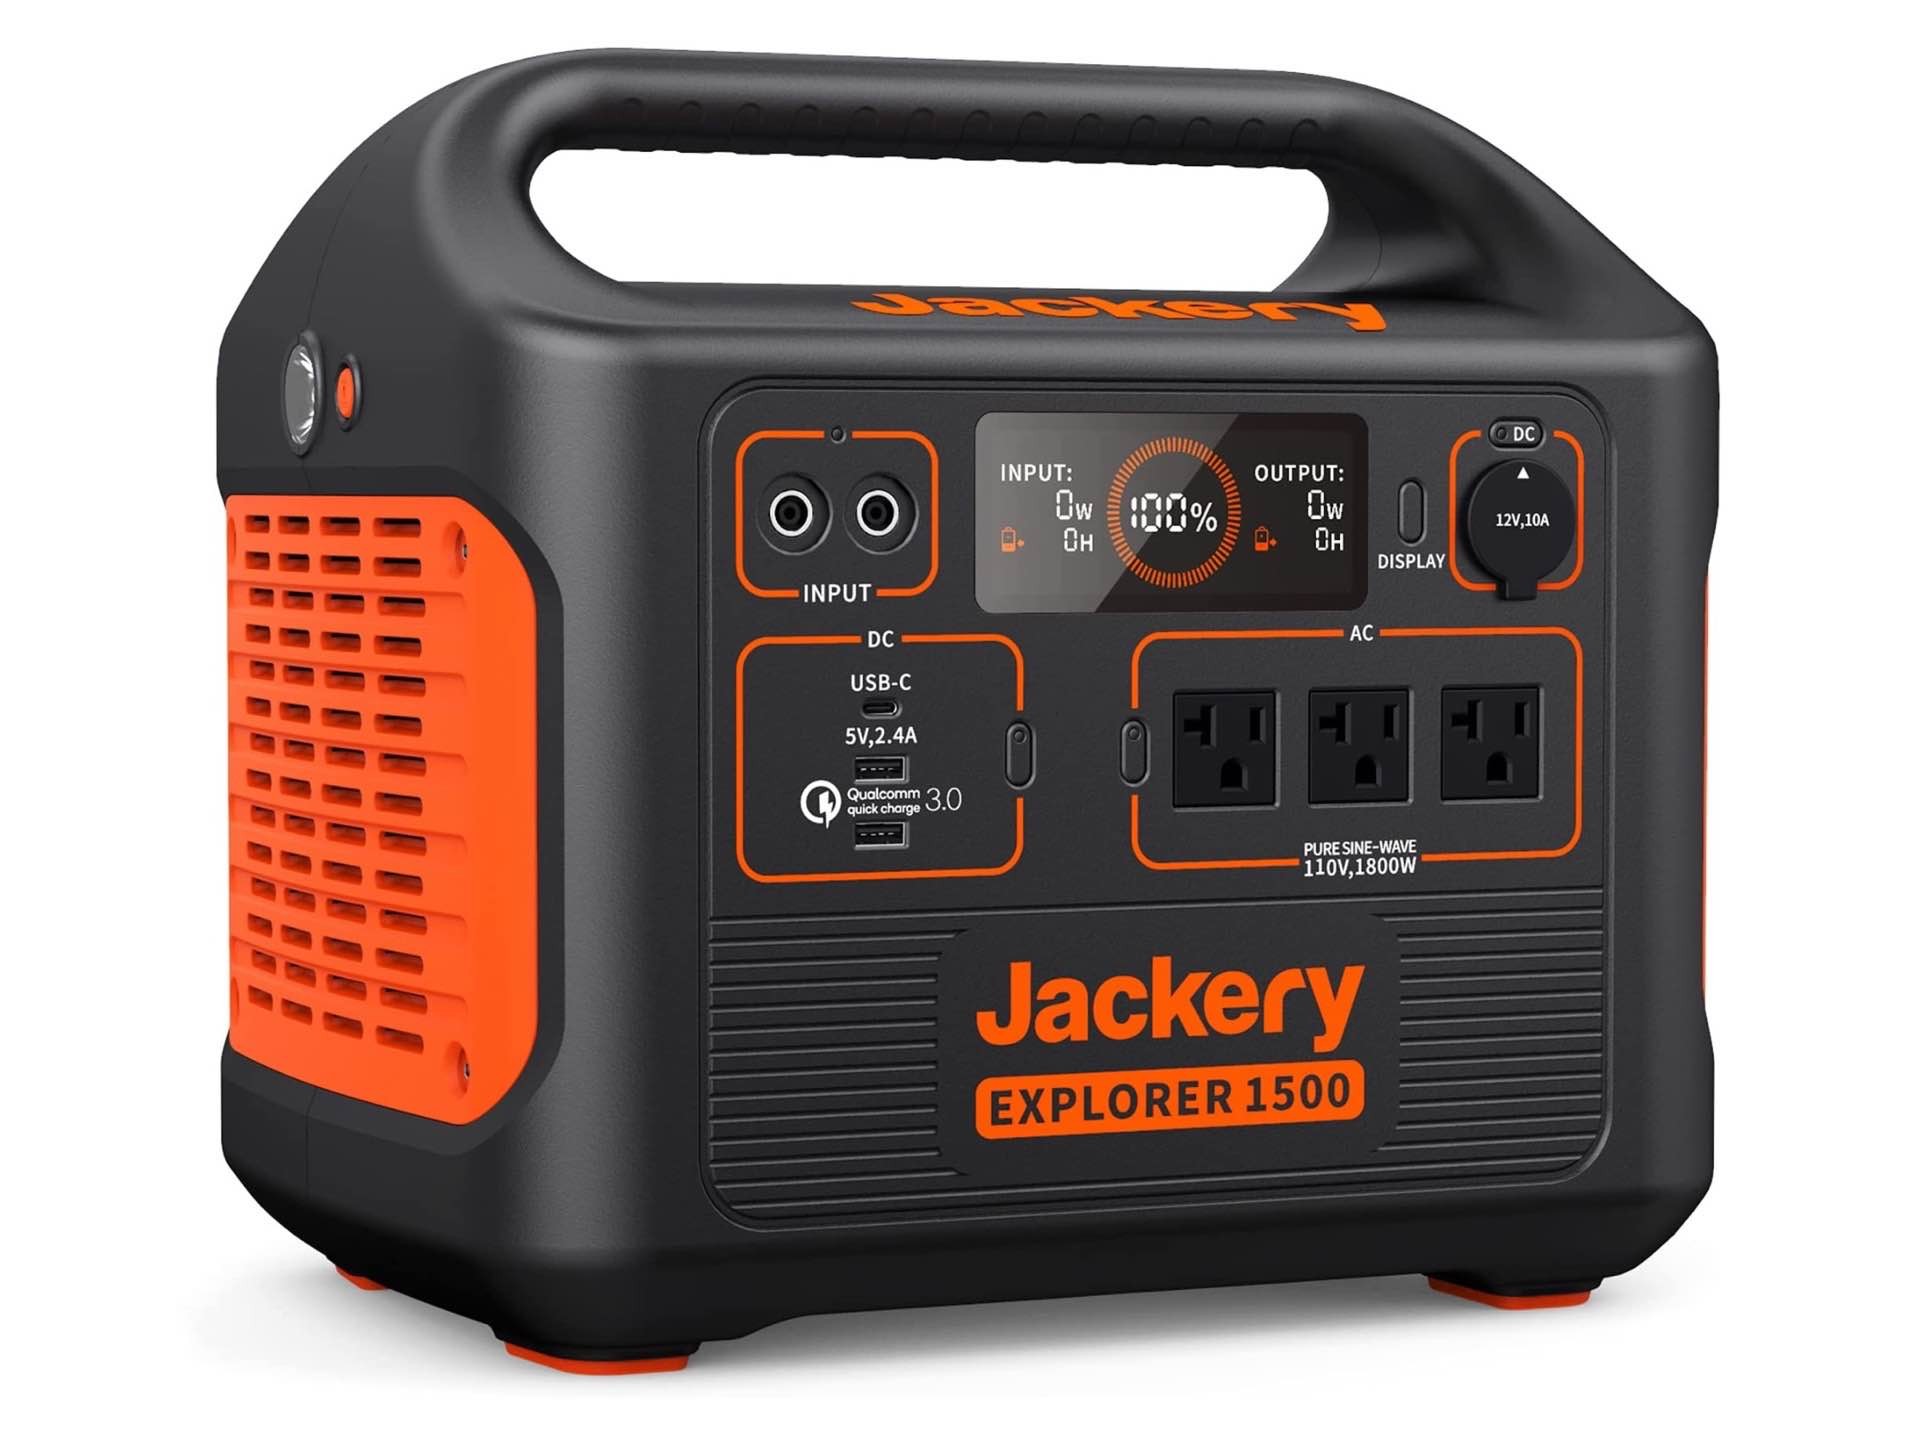 Jackery Explorer 1500 portable power station. ($1,599)